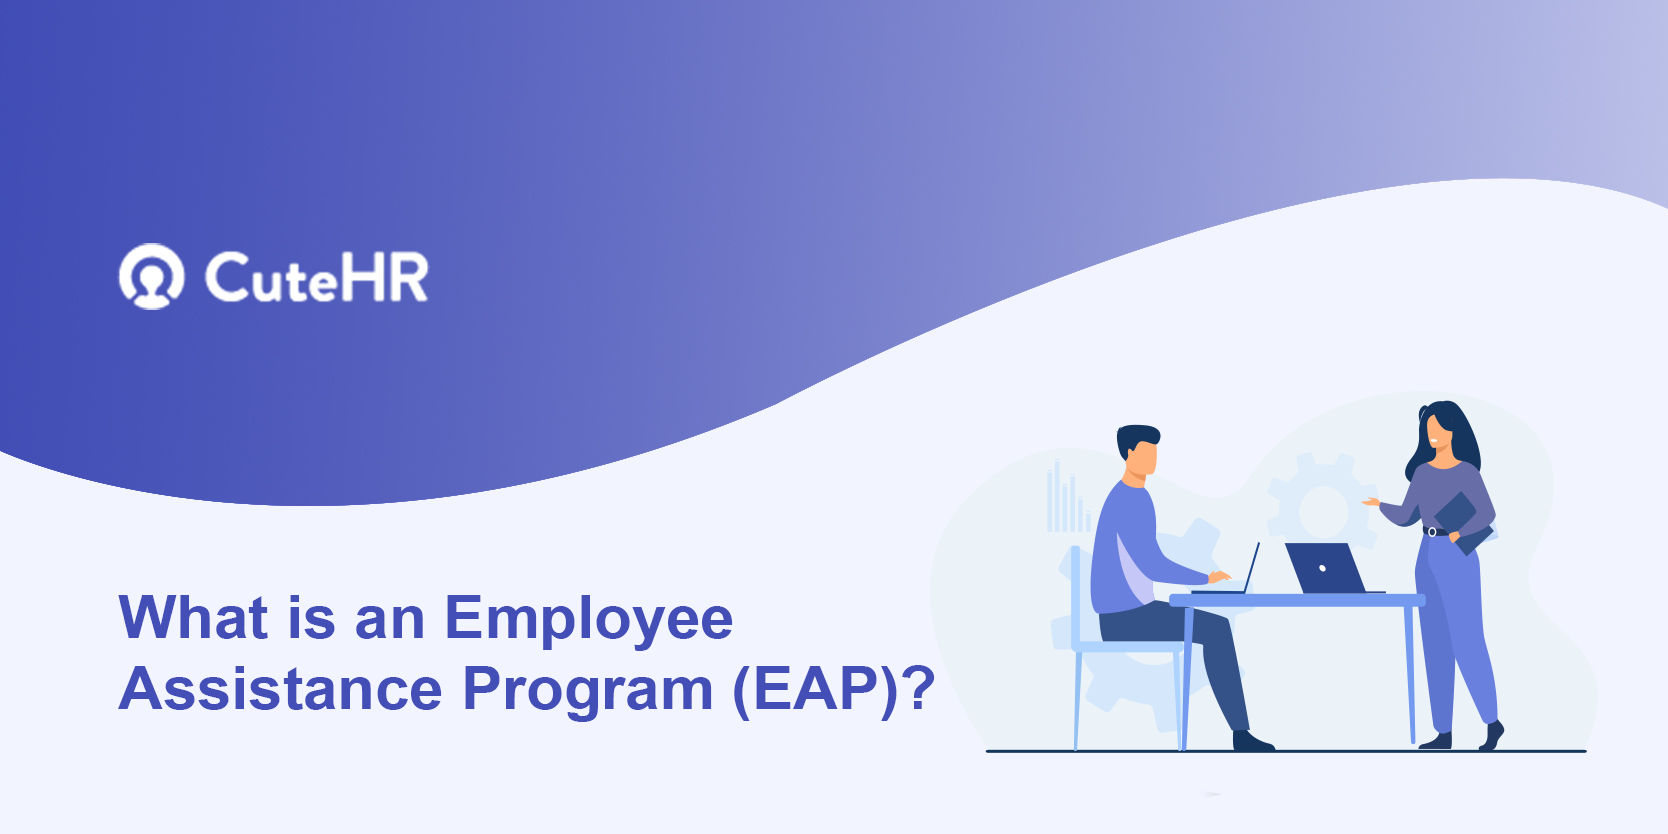 What is an Employee Assistance Program (EAP)?